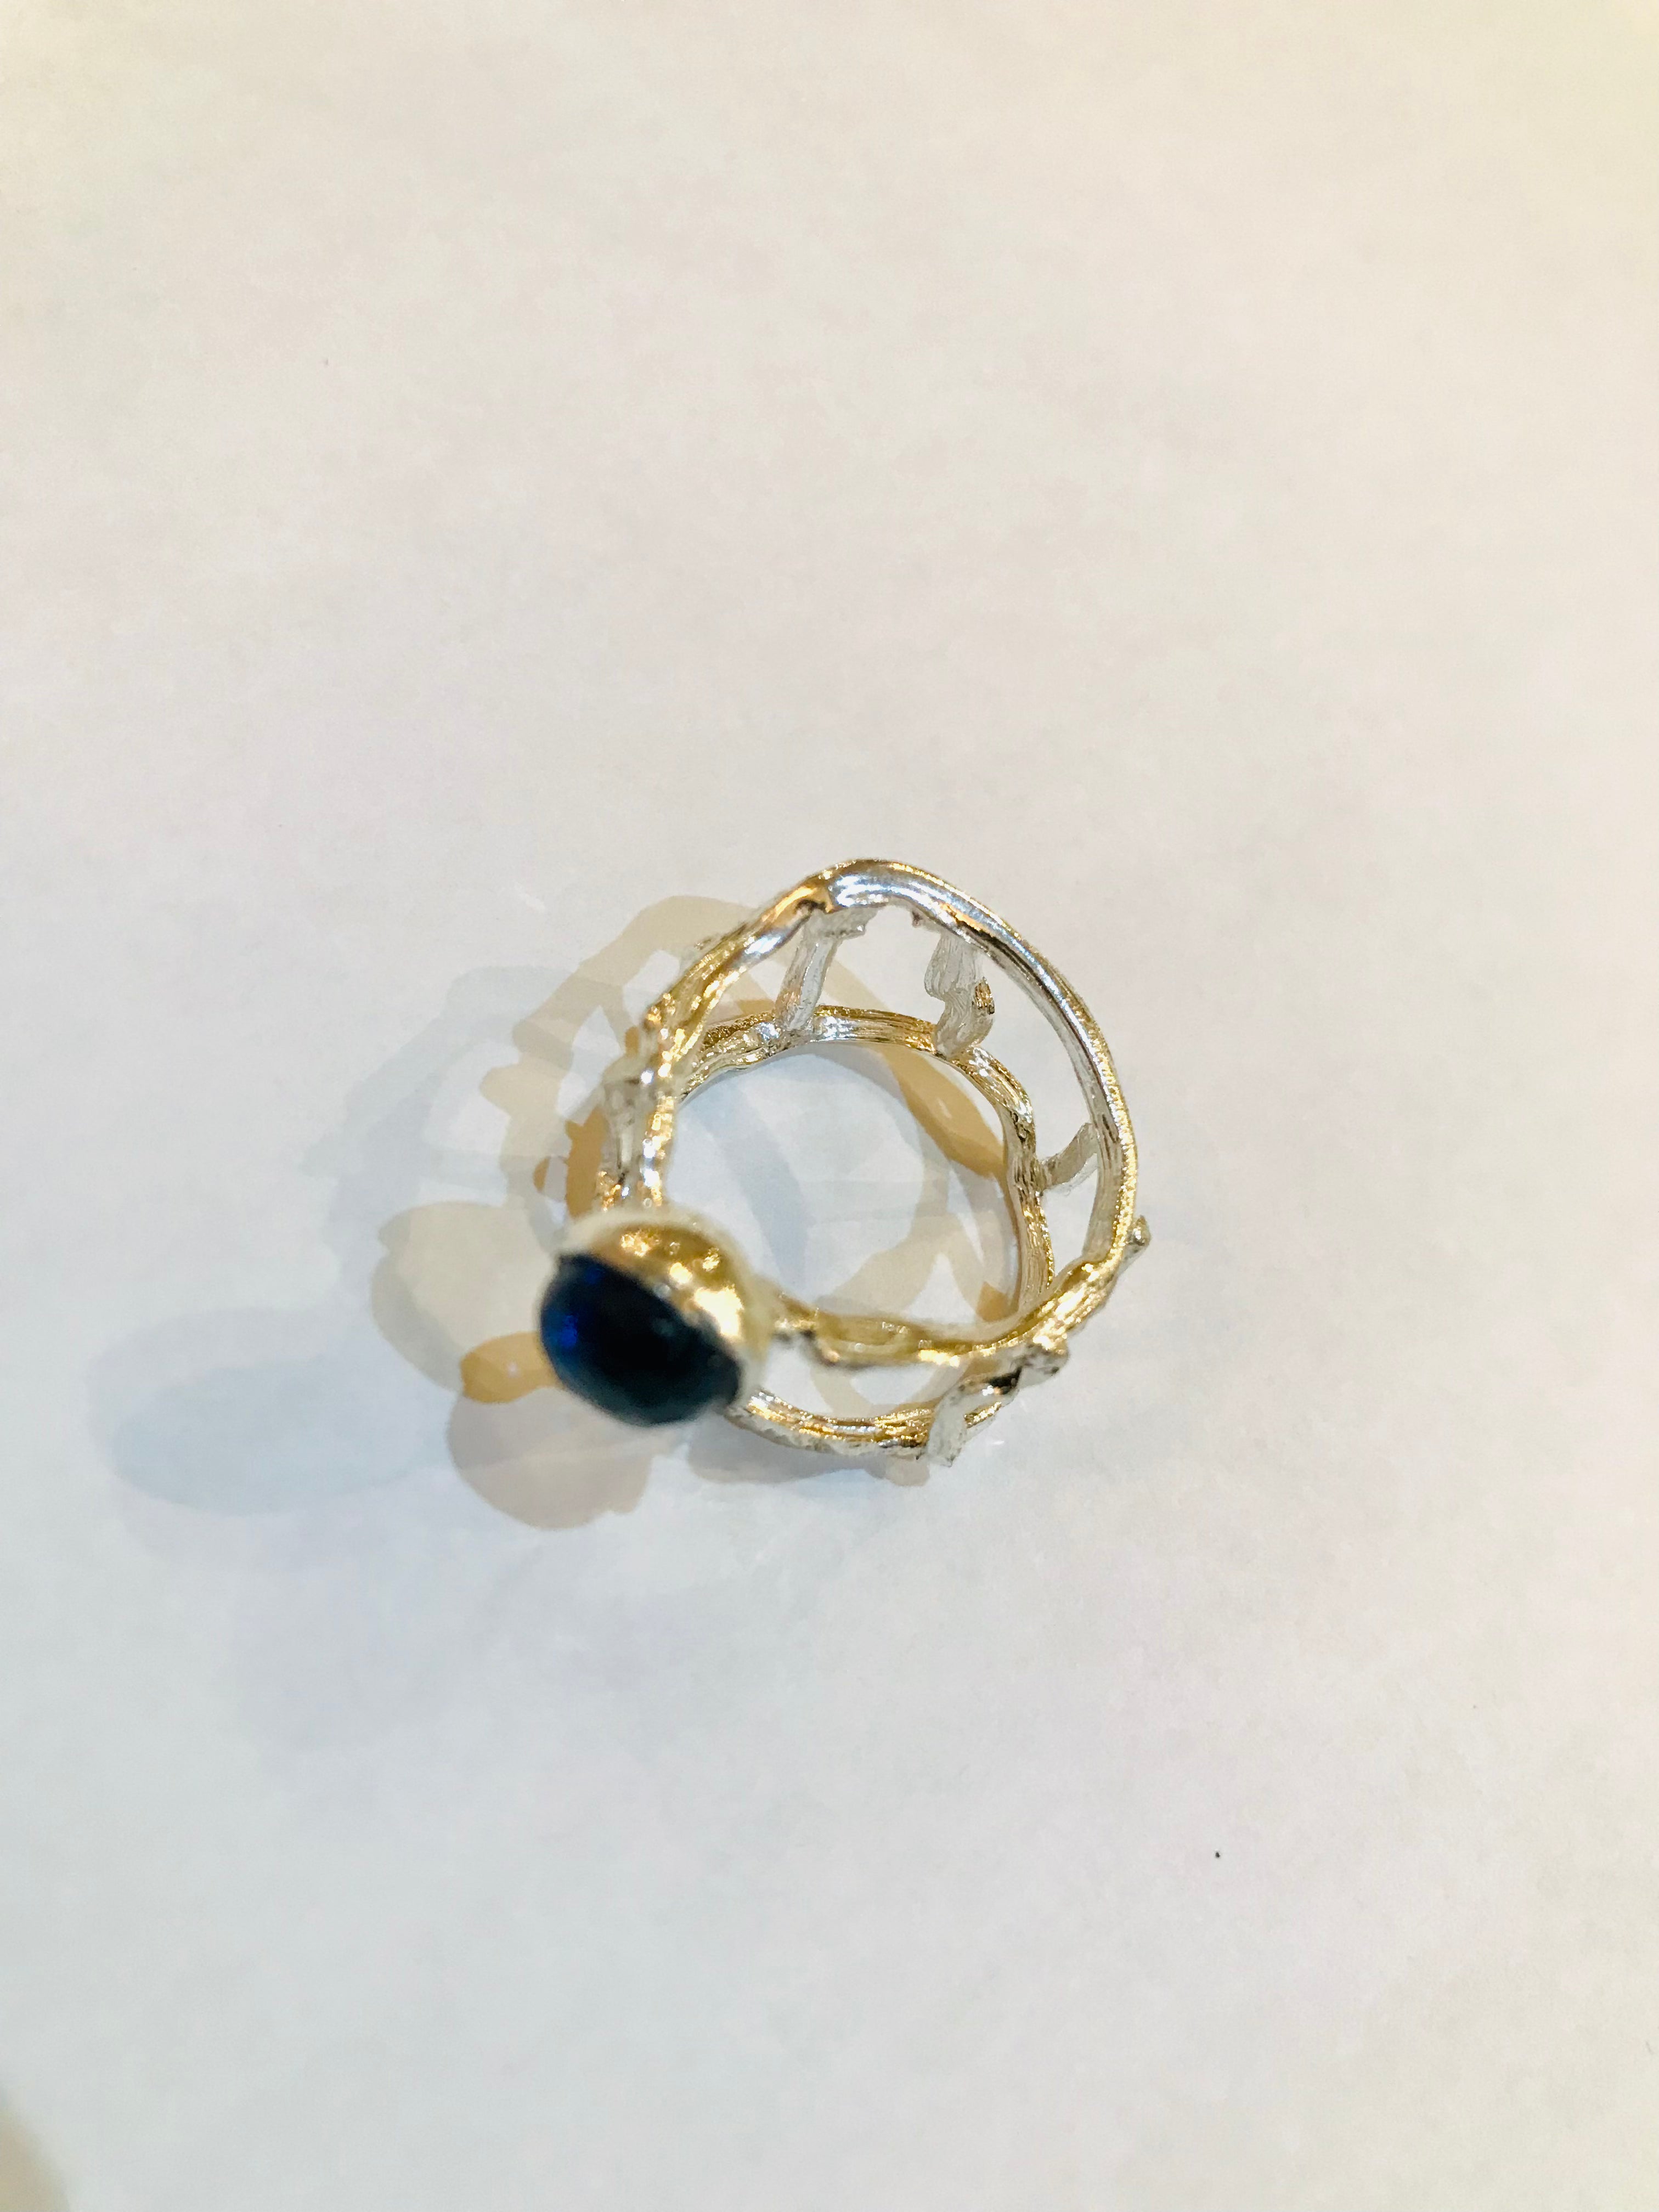 Blue Topaz Quartz Ring - The Nancy Smillie Shop - Art, Jewellery & Designer Gifts Glasgow